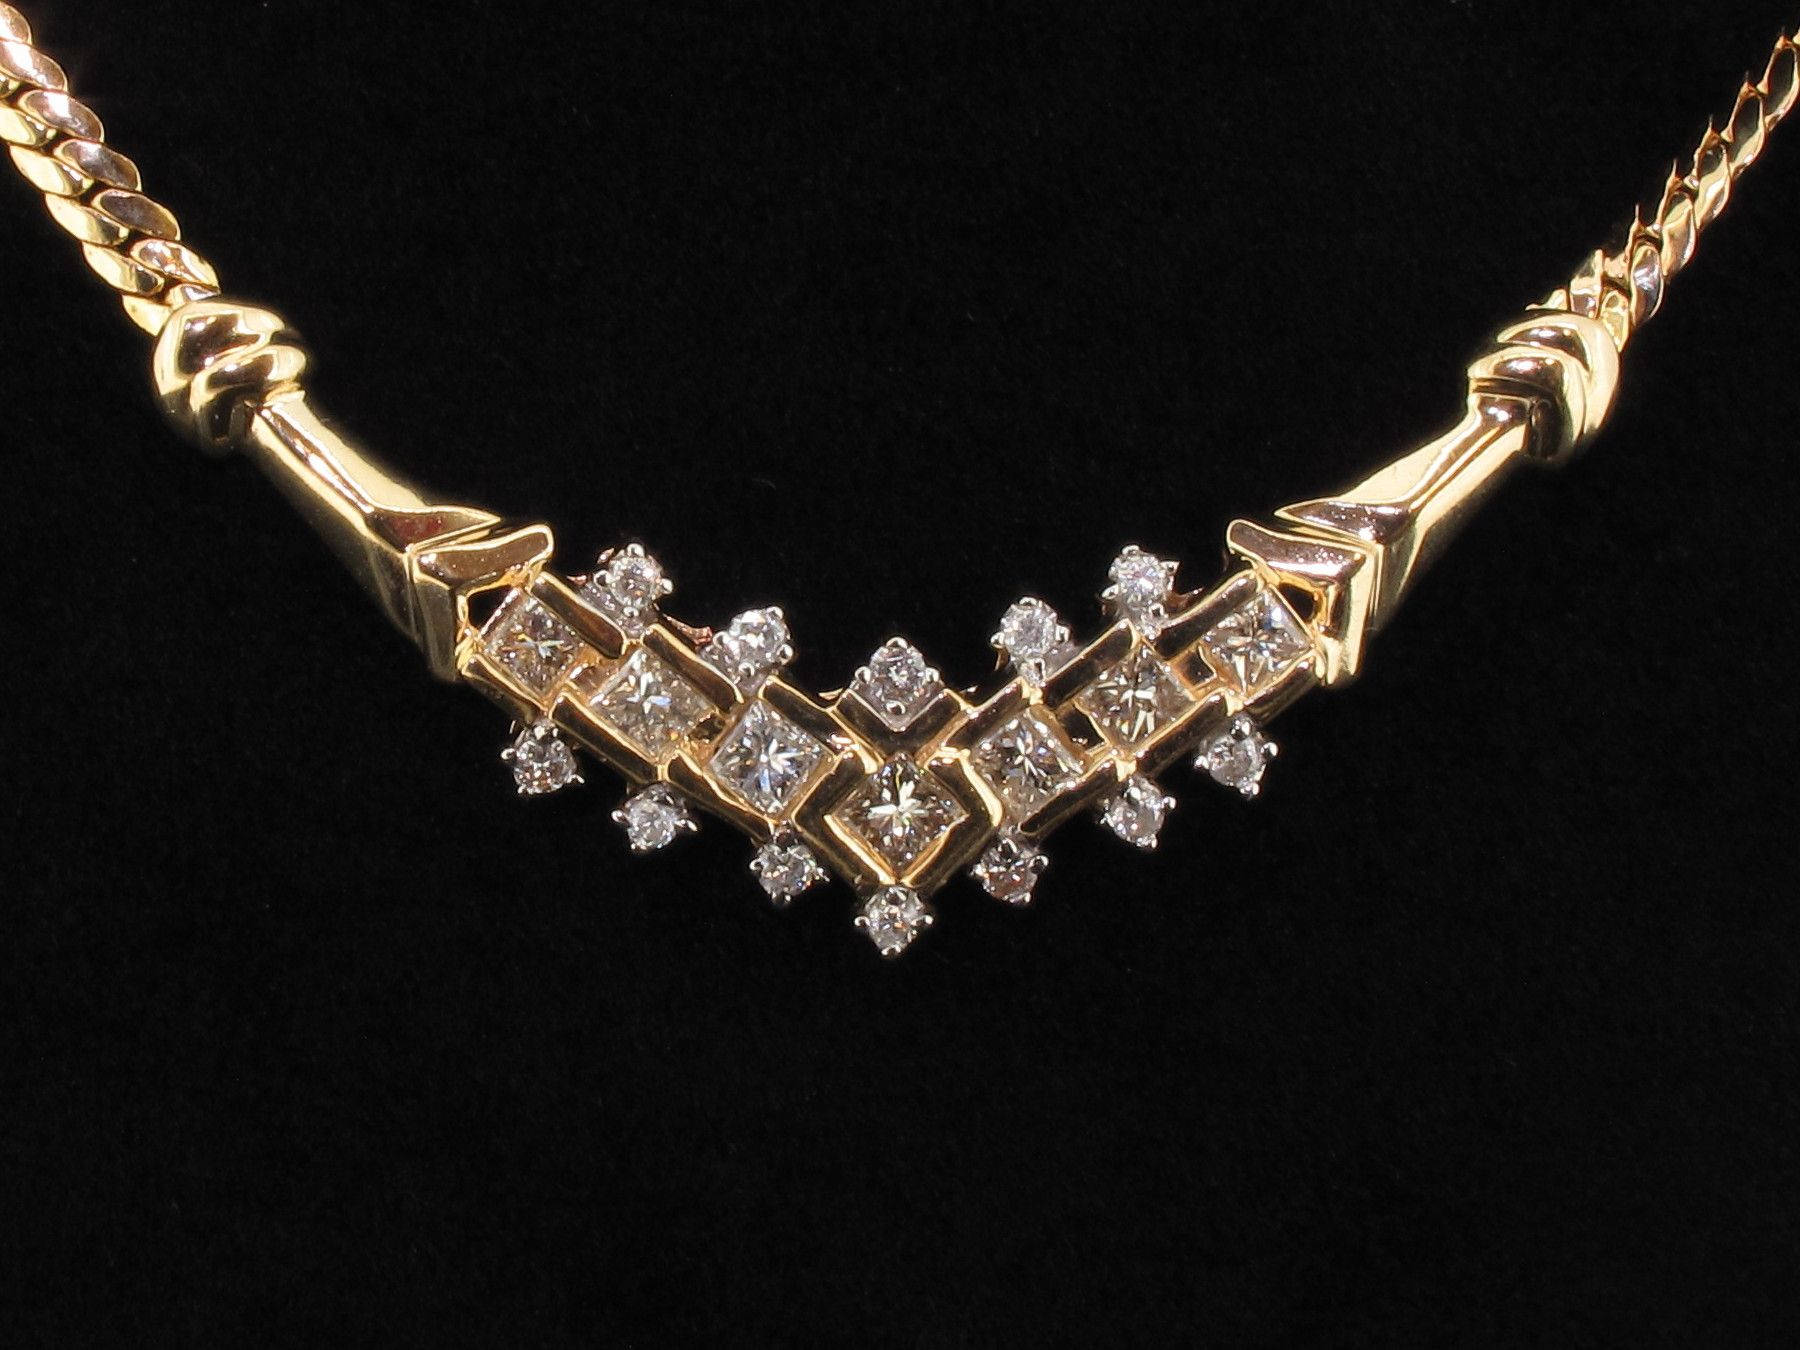 Jewelry Necklace Studded With Diamonds Background